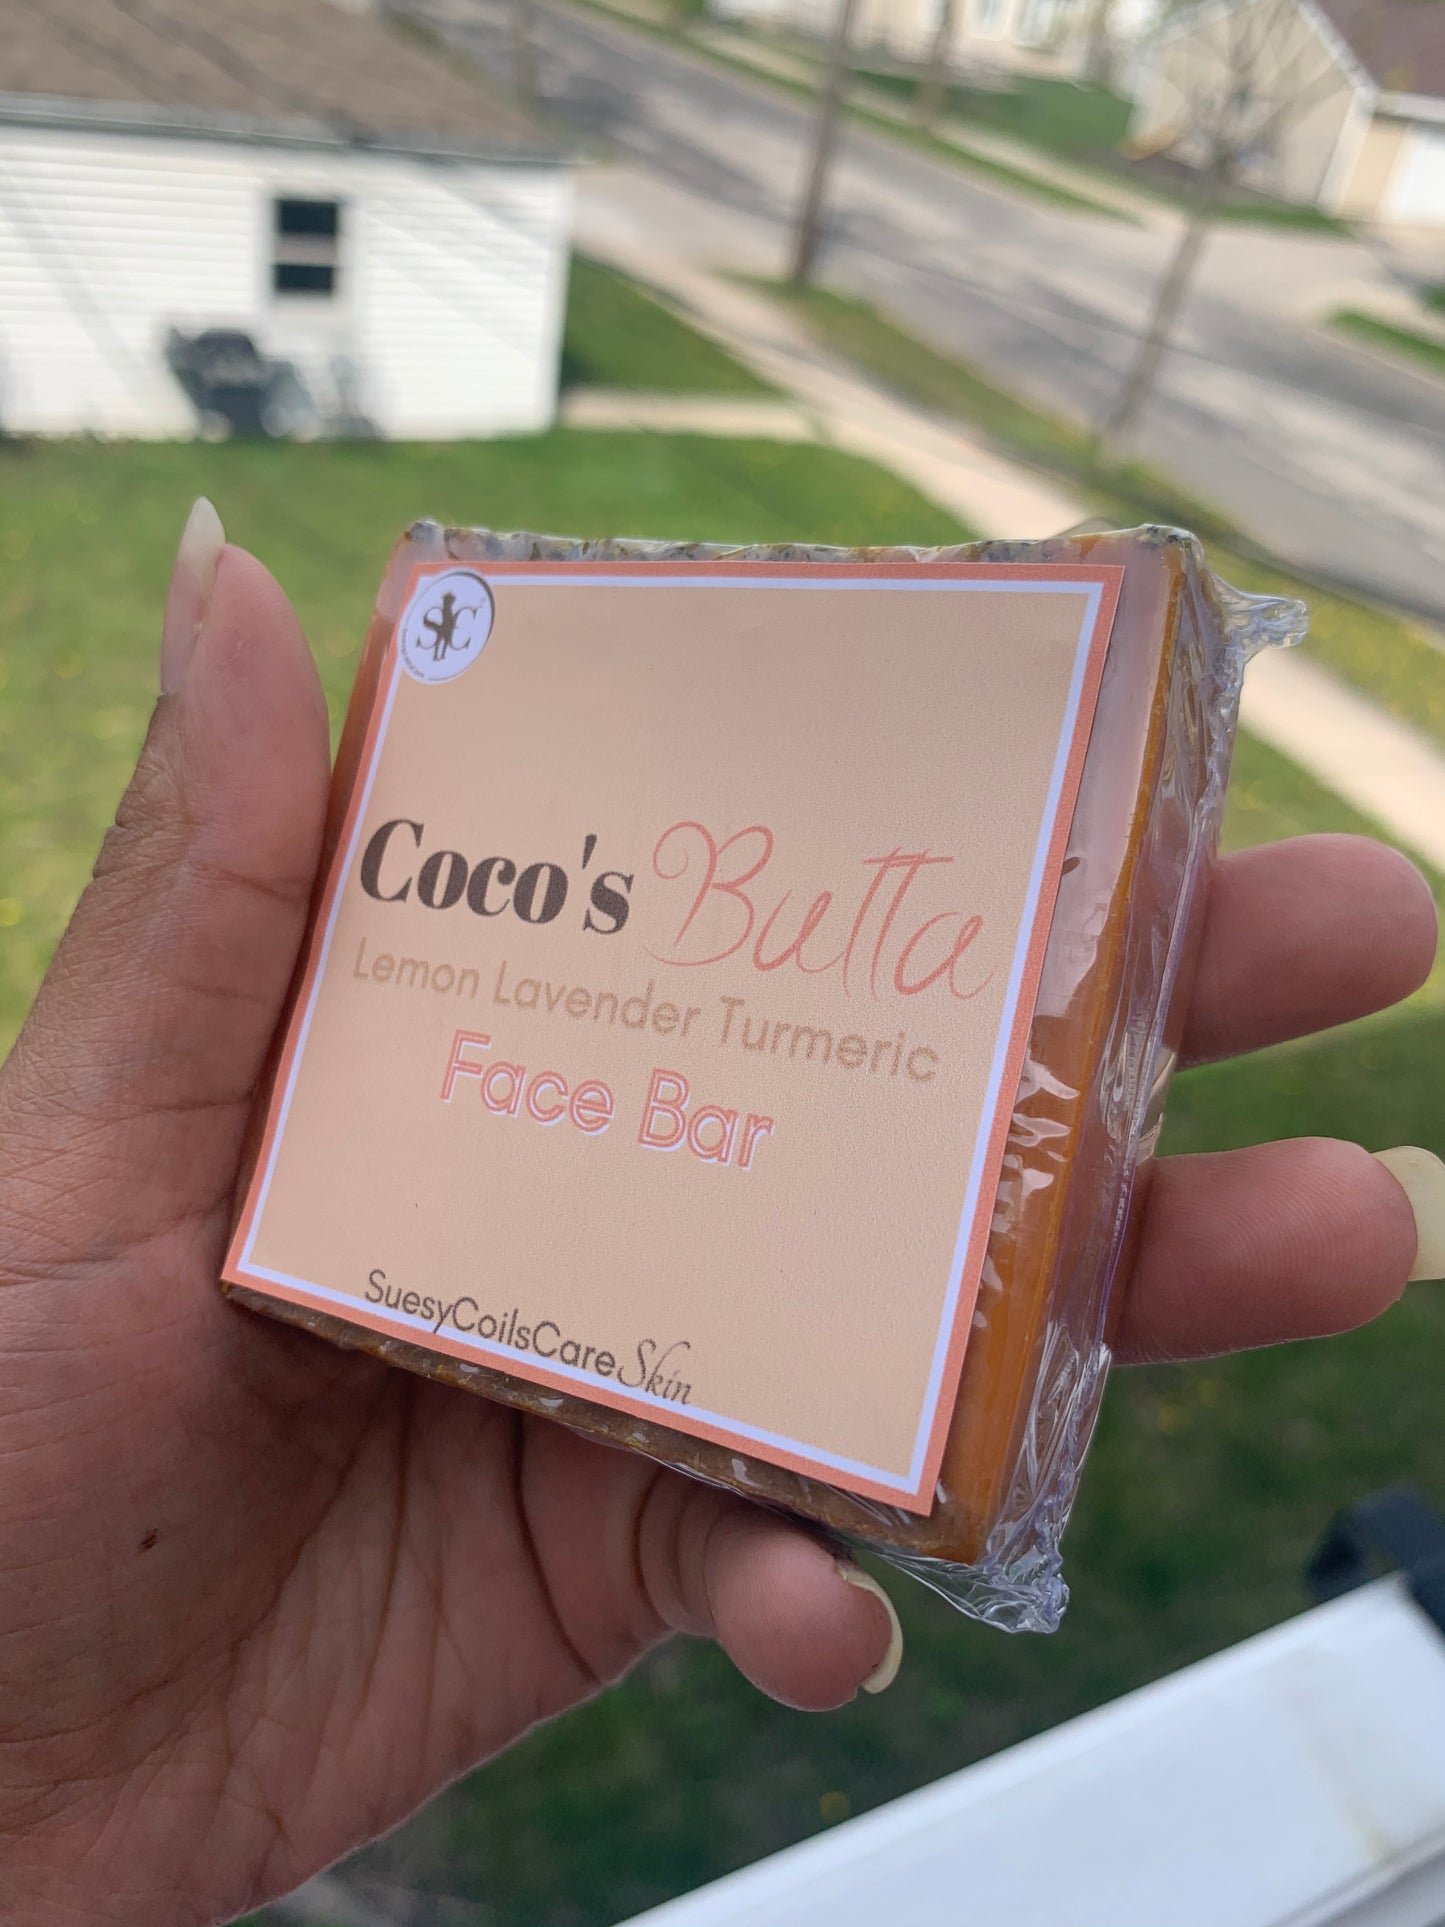 Coco's Butta Lemon Lavender Turmeric Face Bar